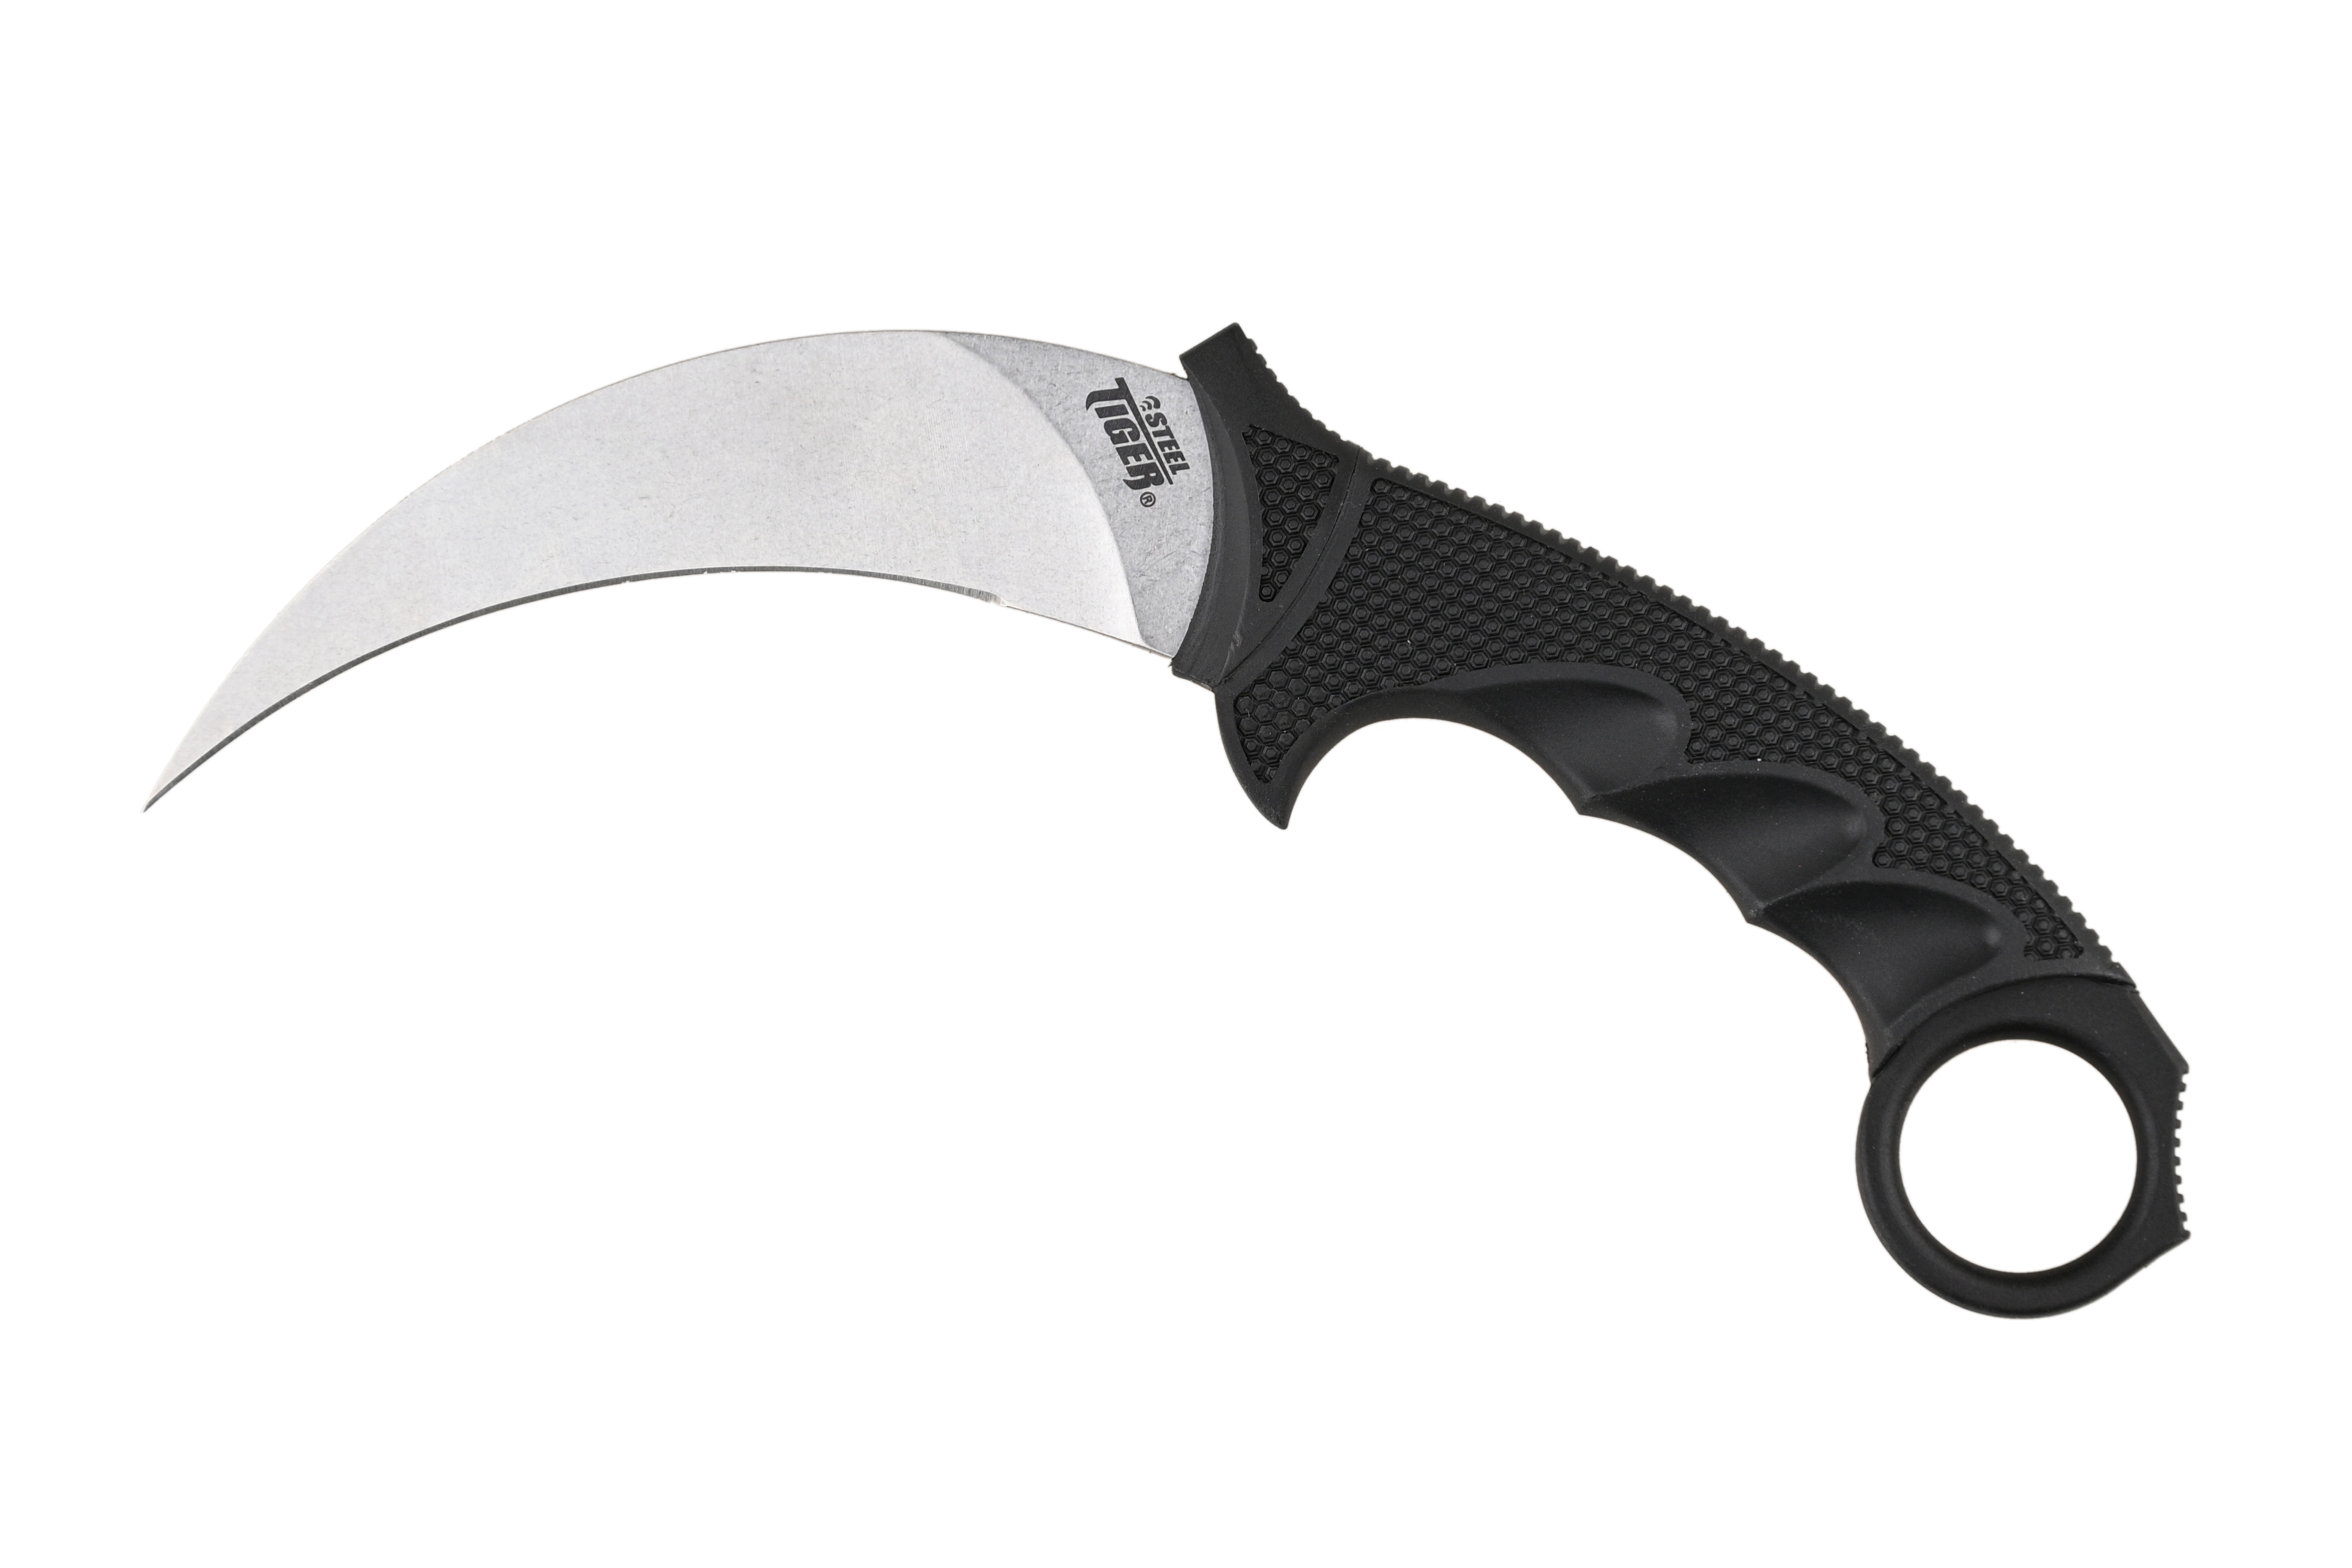 Нож Cold Steel Tiger фикс. клинок сталь AUS8 рукоять пластик